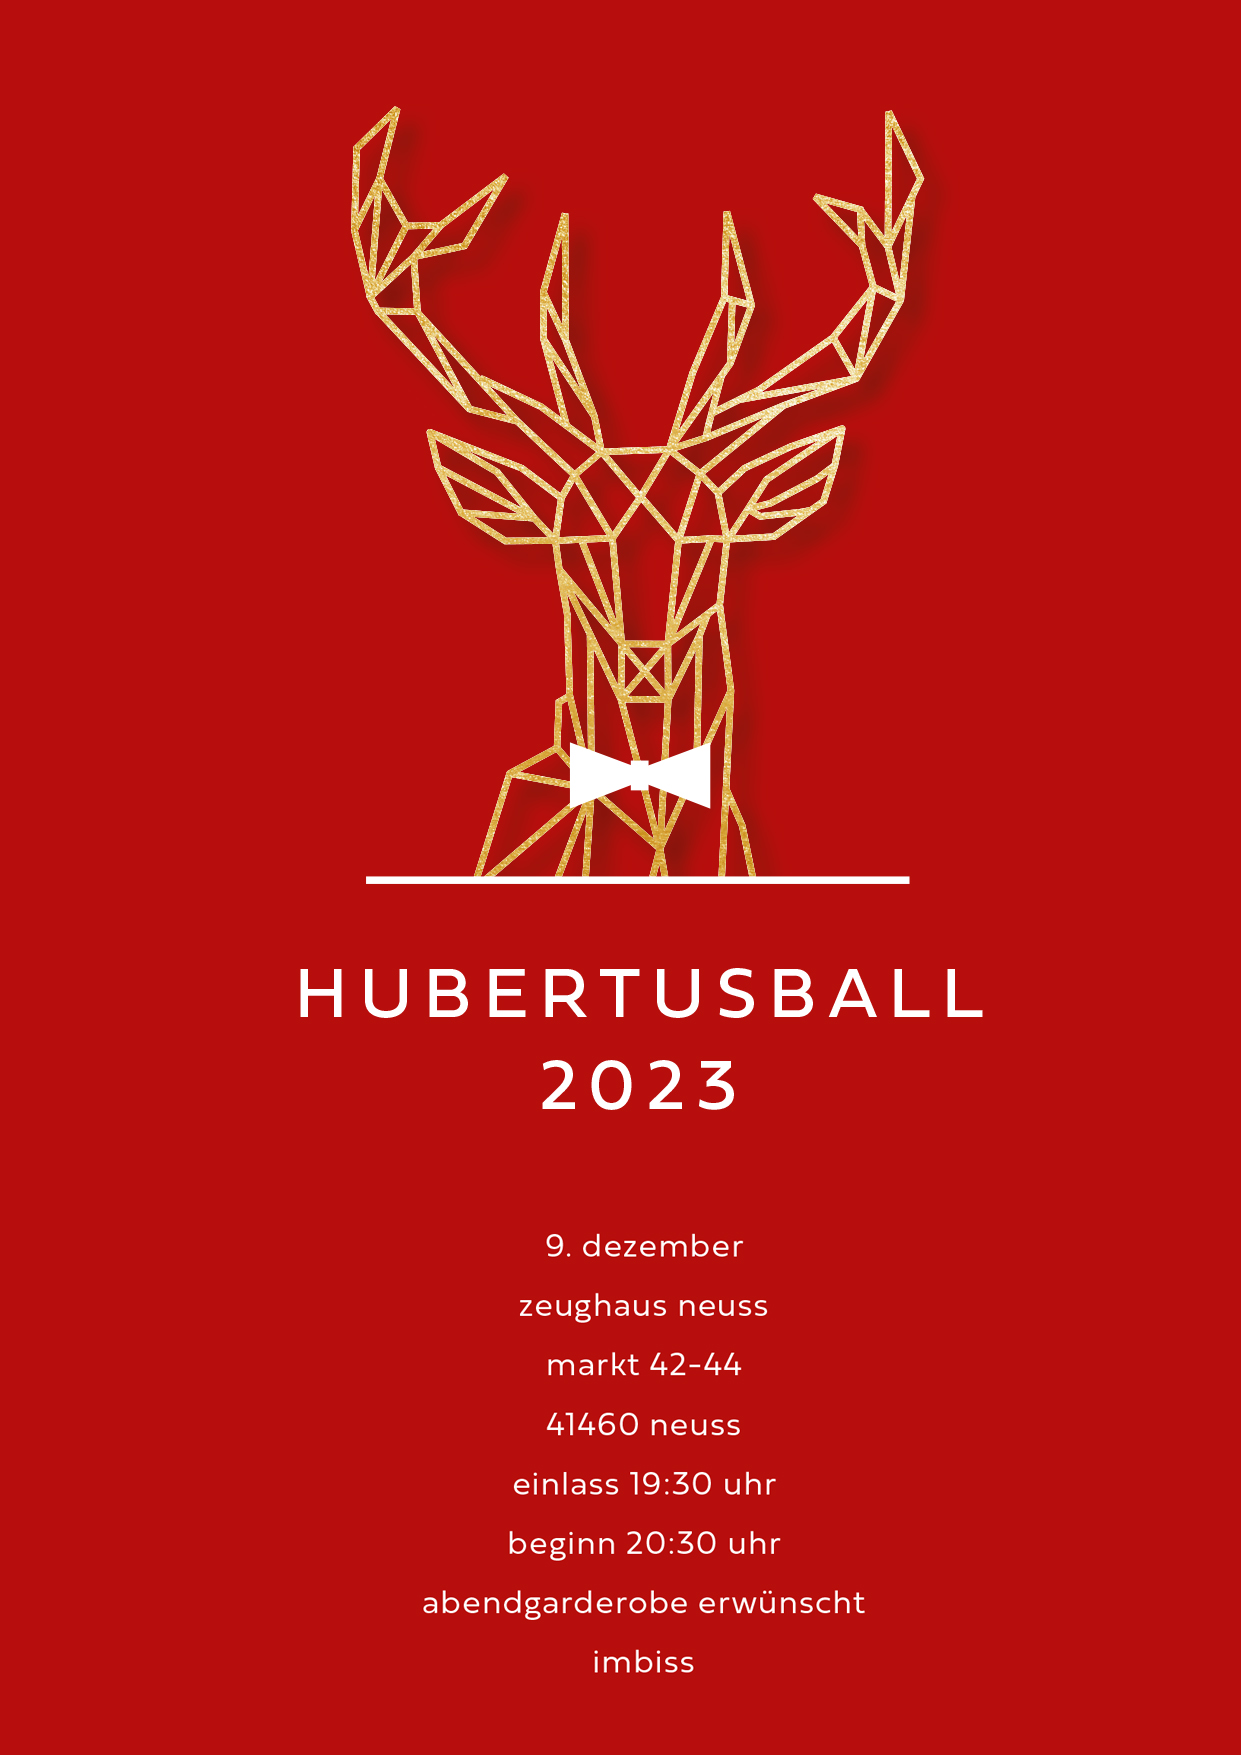 Hubertusball 2023